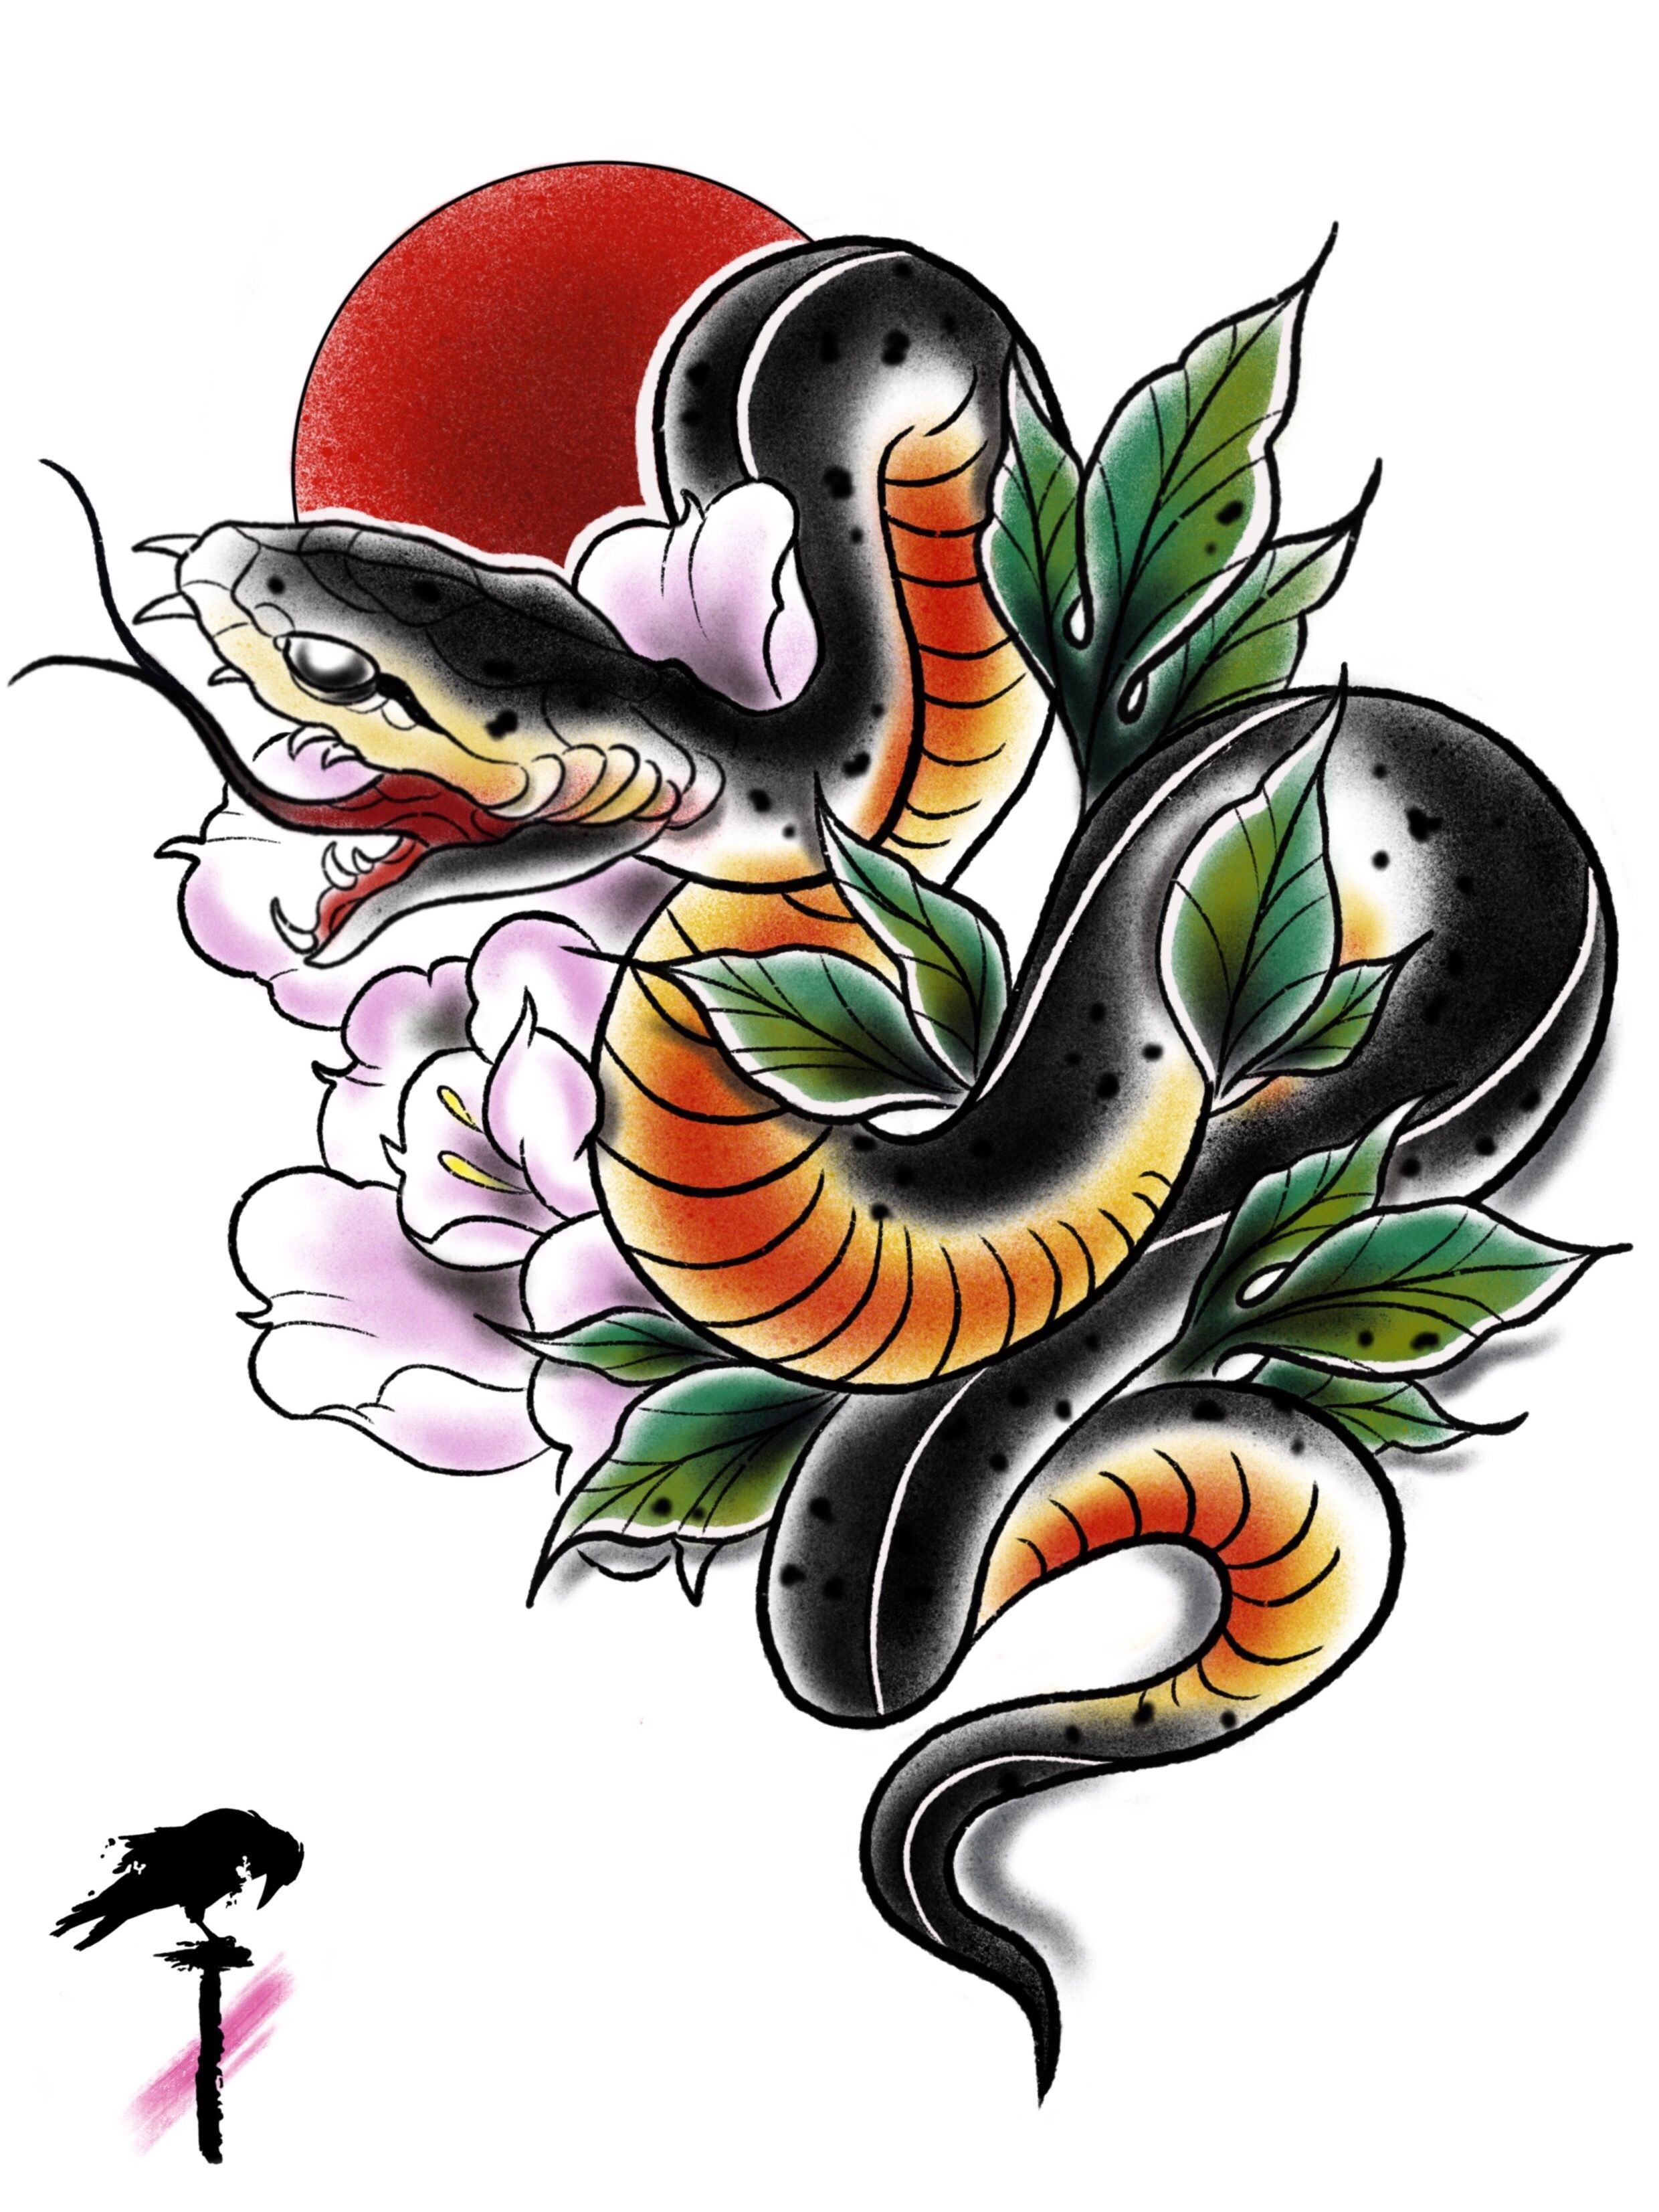 15 Traditional Japanese Snake Tattoo Designs  PetPress